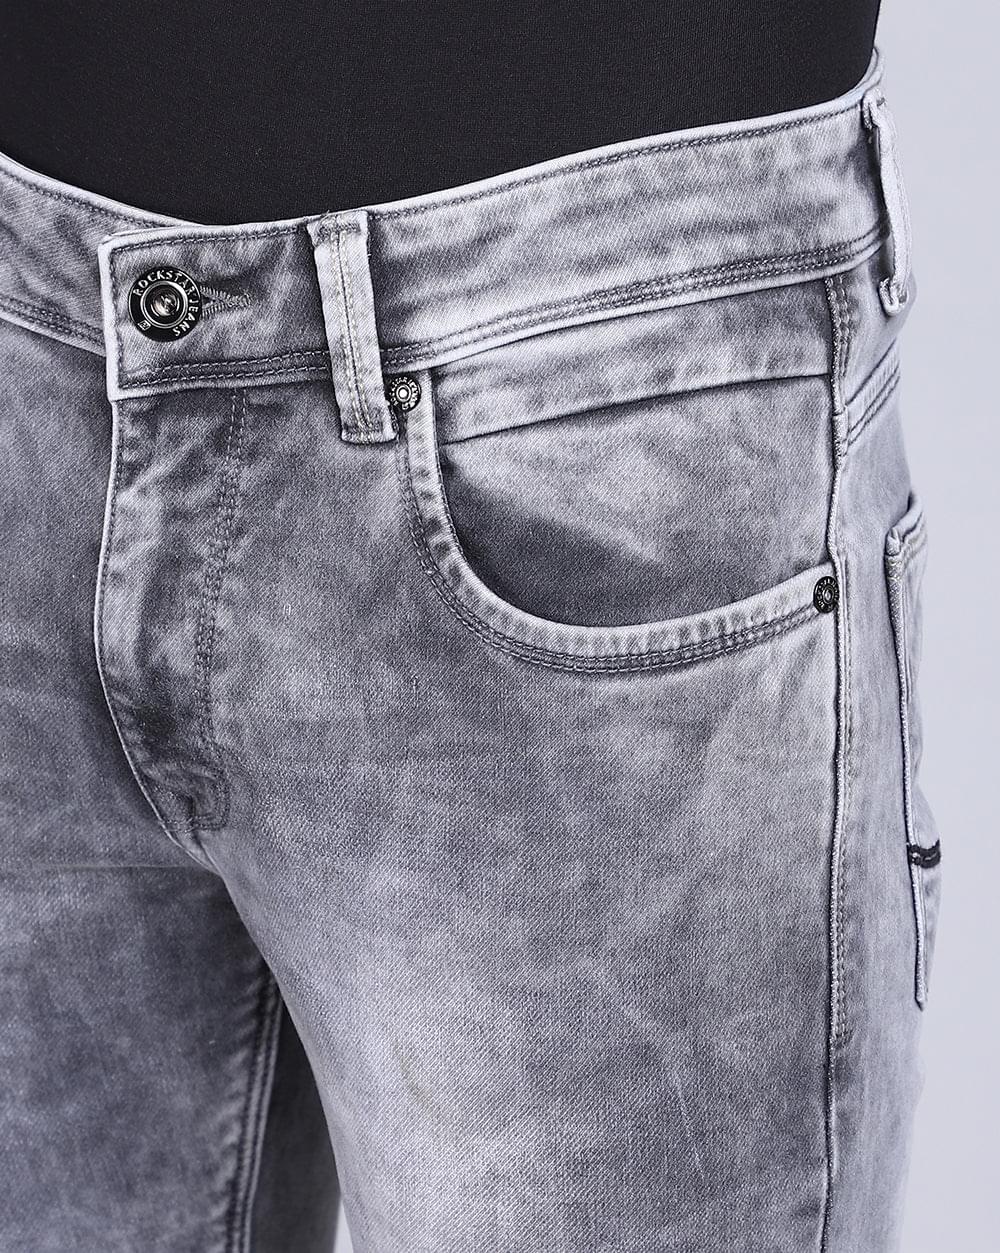 Ankle Fit Jeans-Stonewash Light Grey